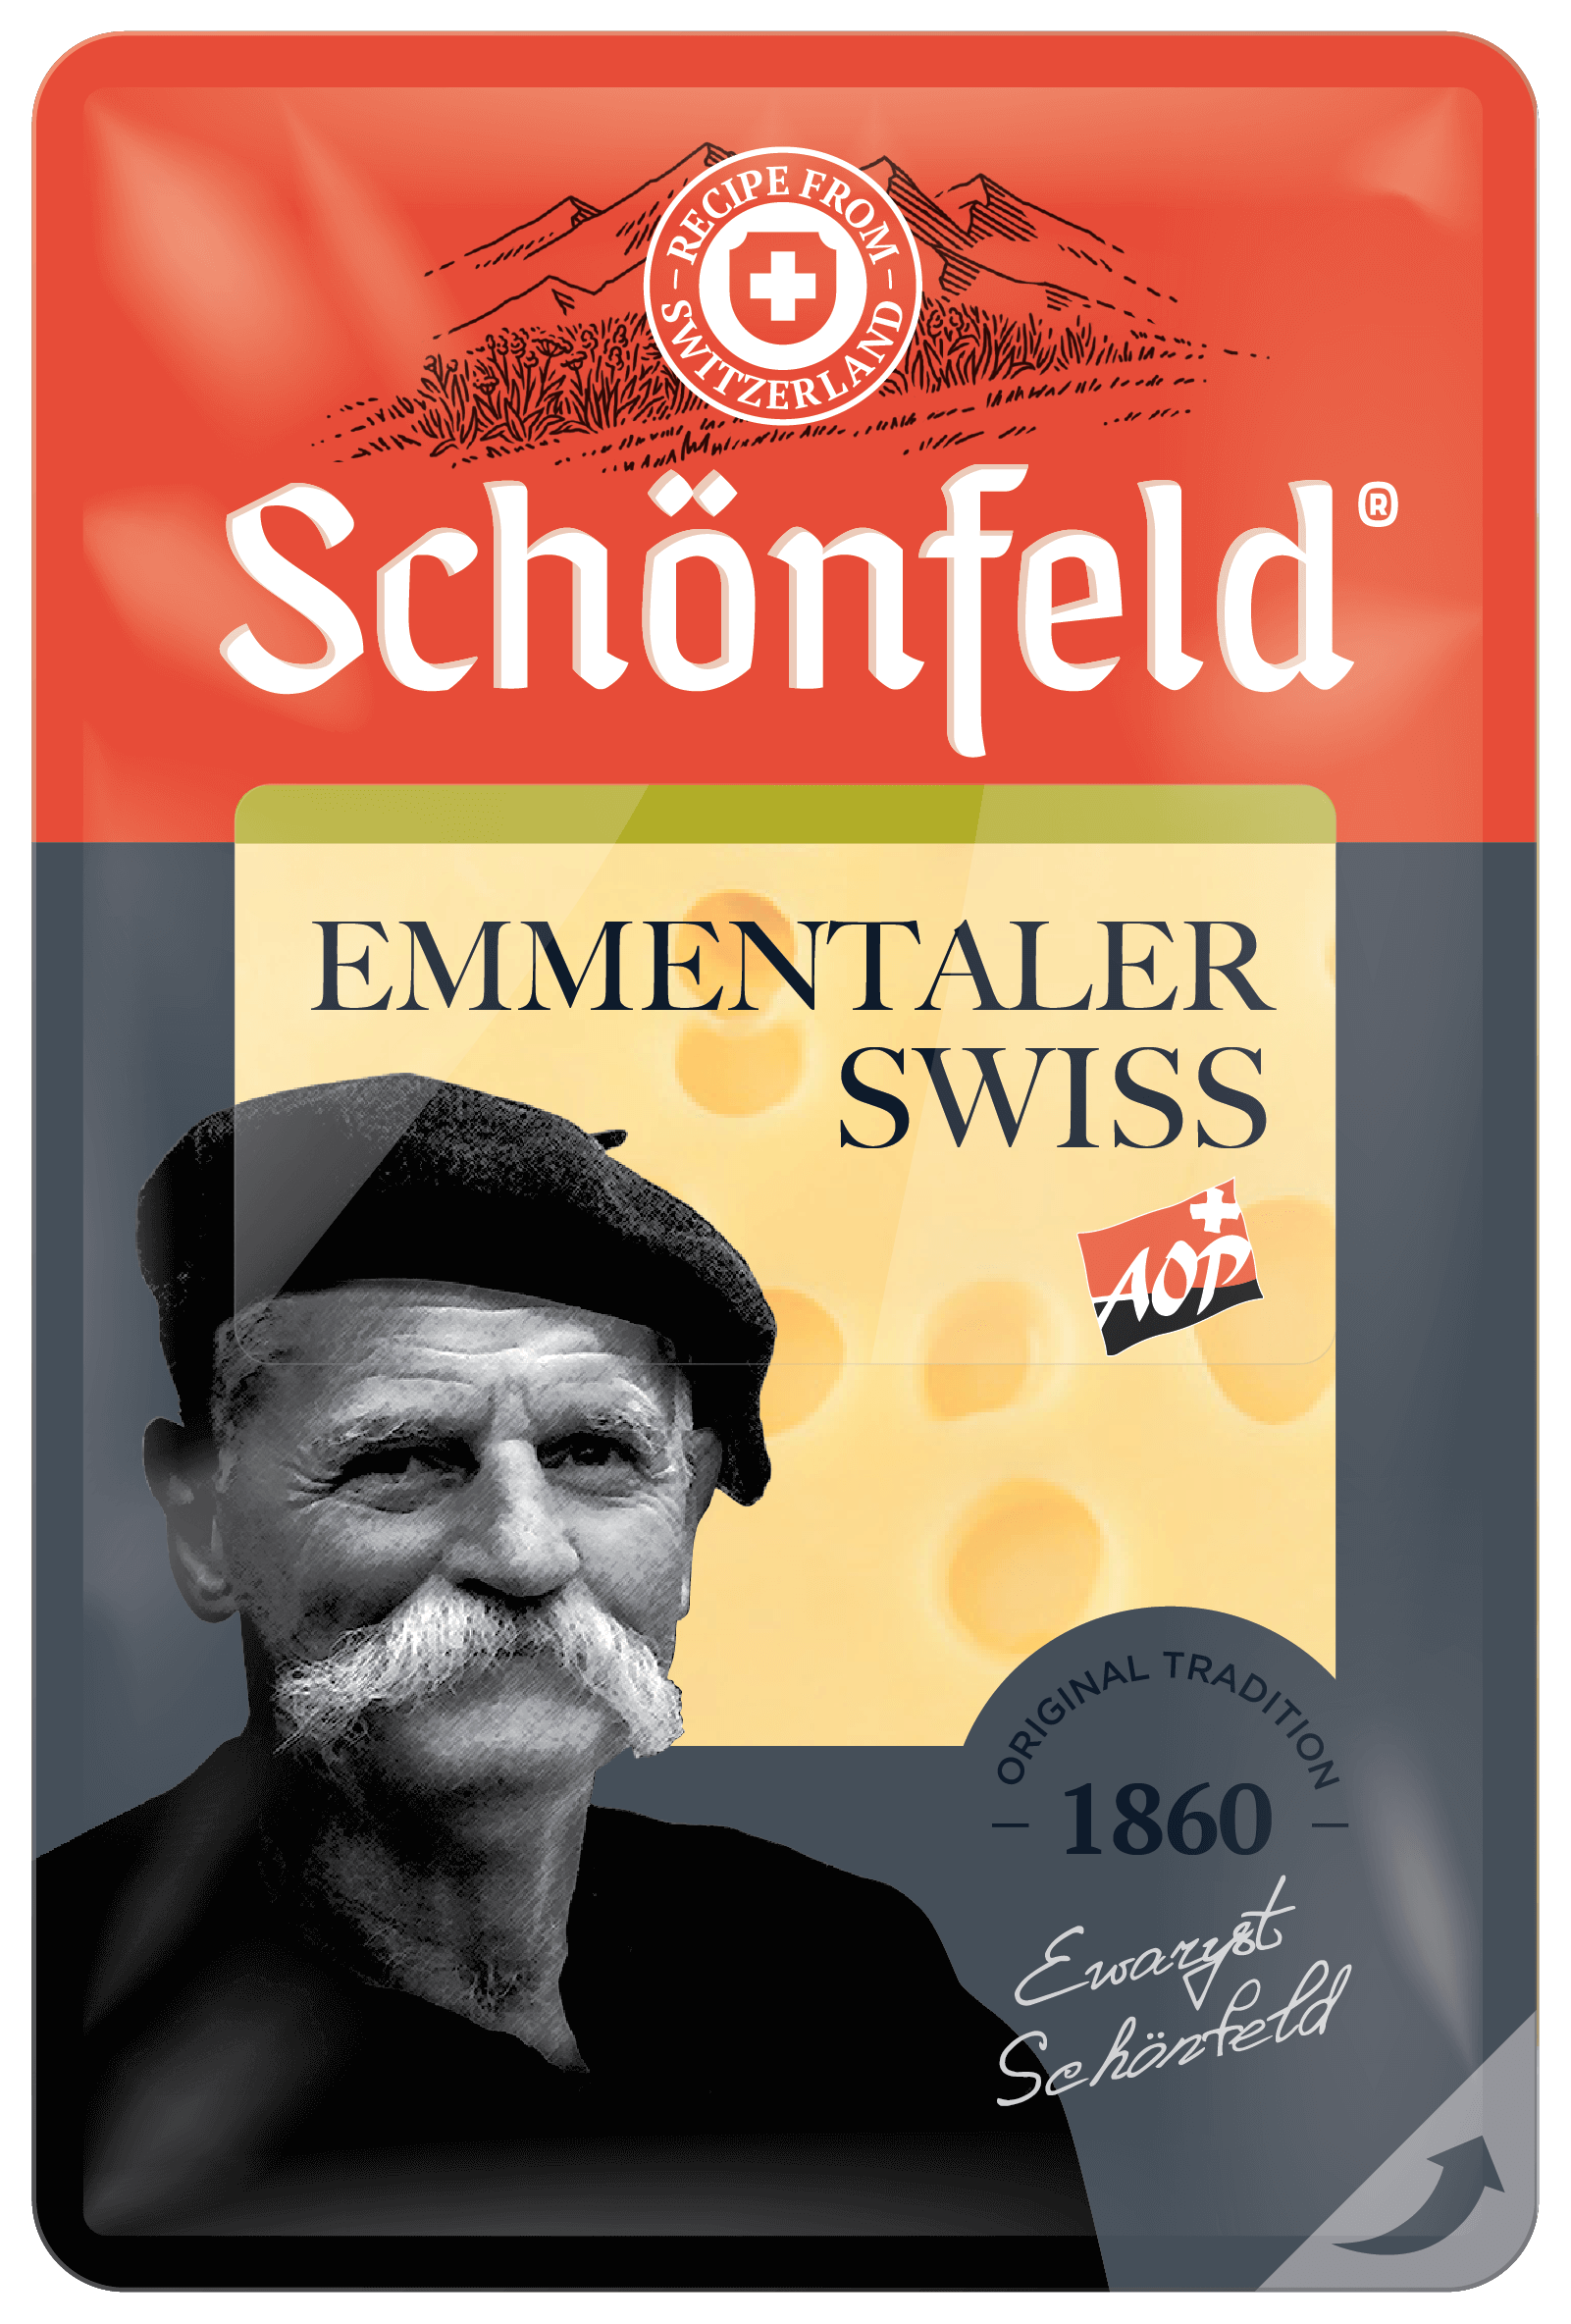 Swiss Emmentaler